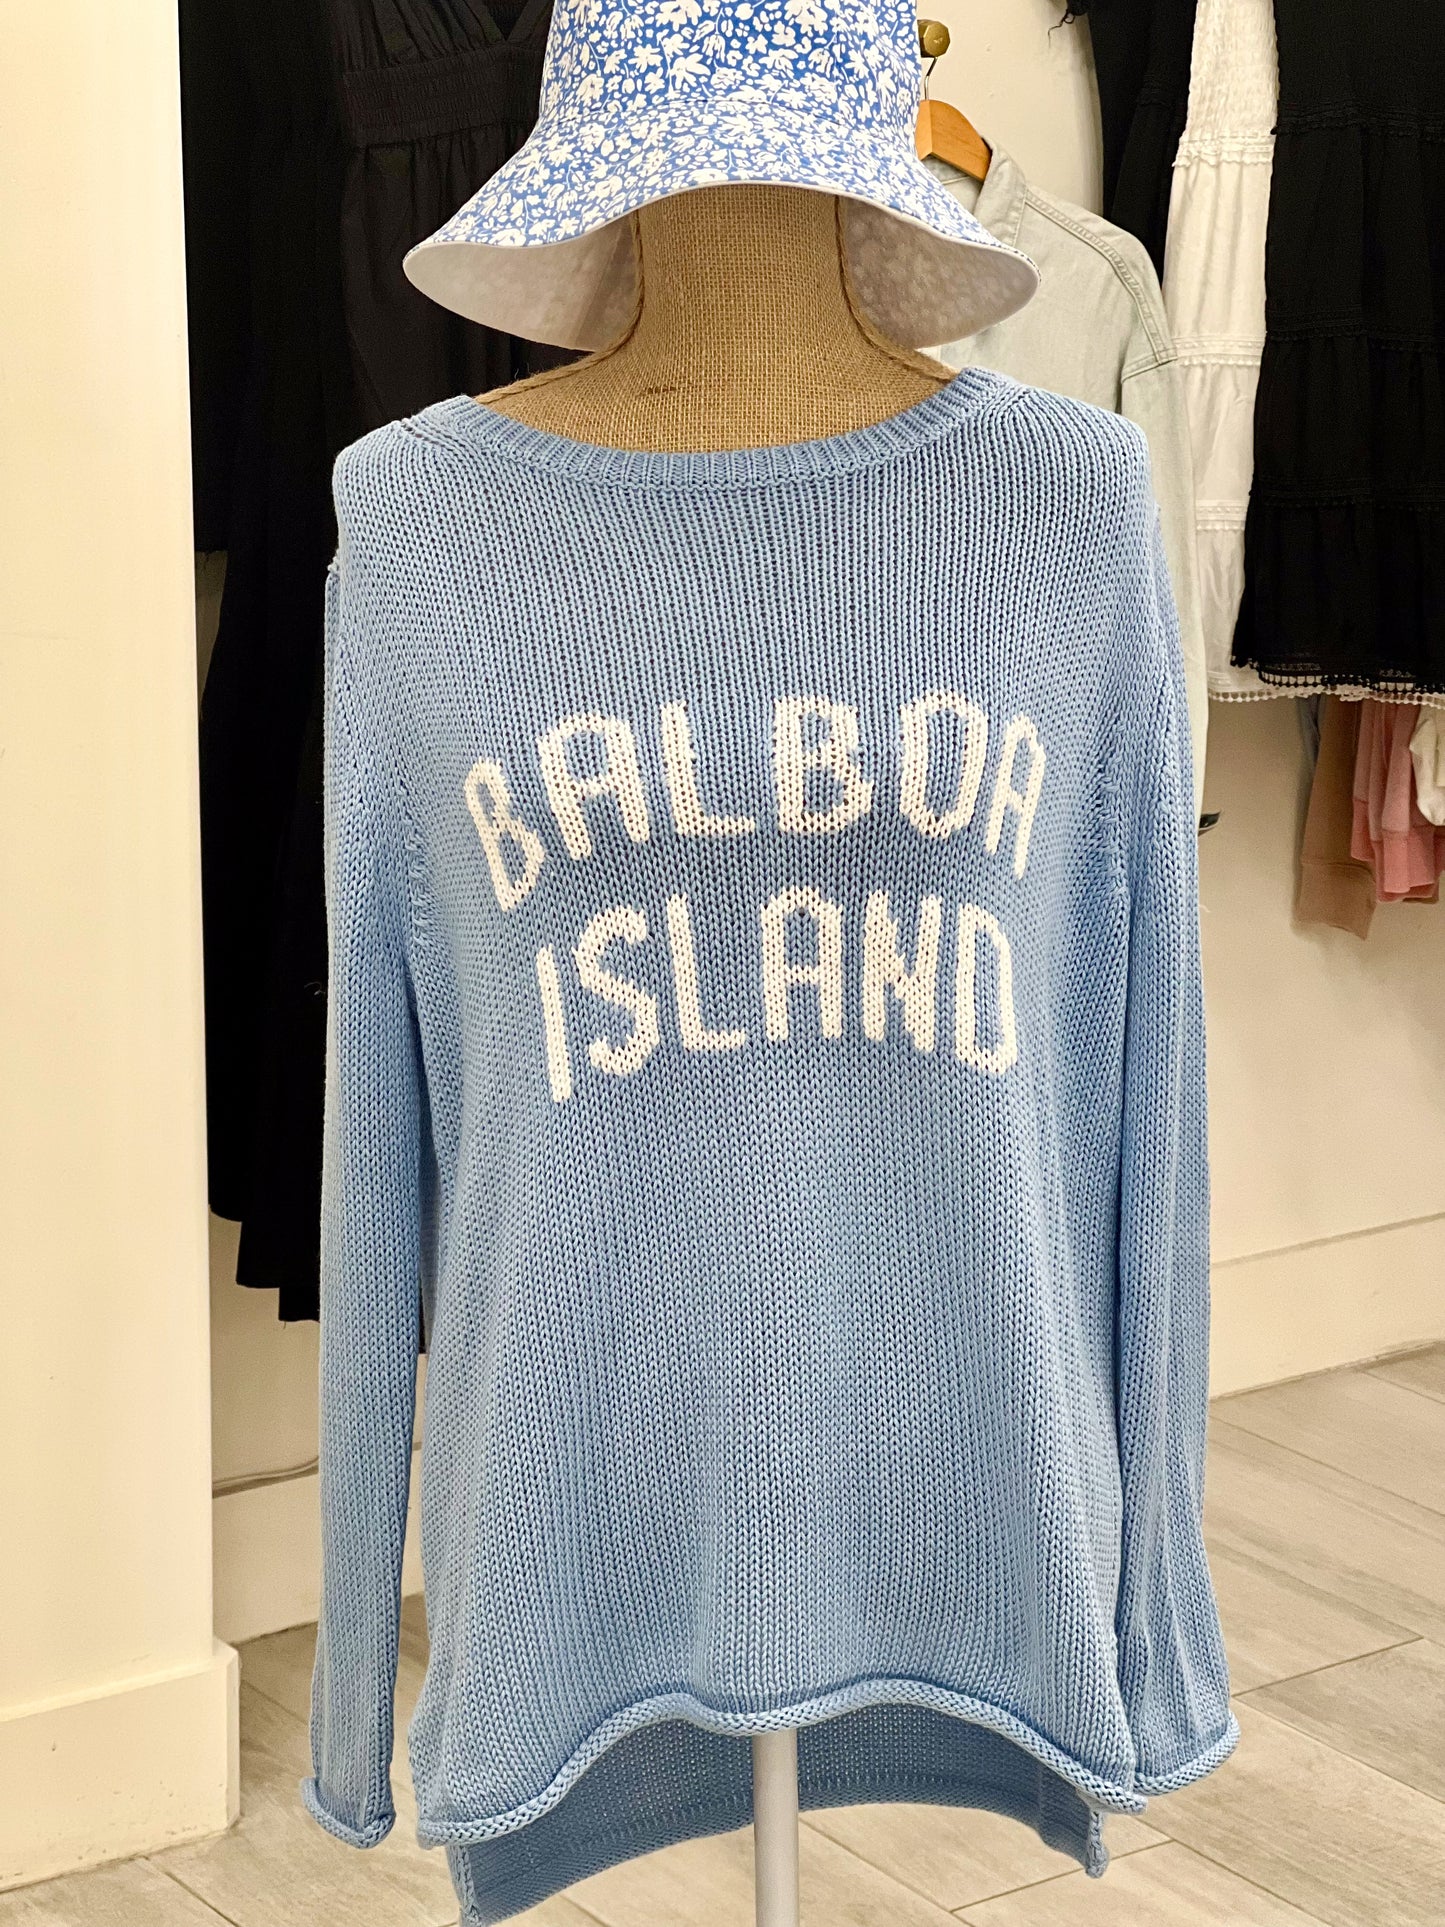 Balboa Island Sweater